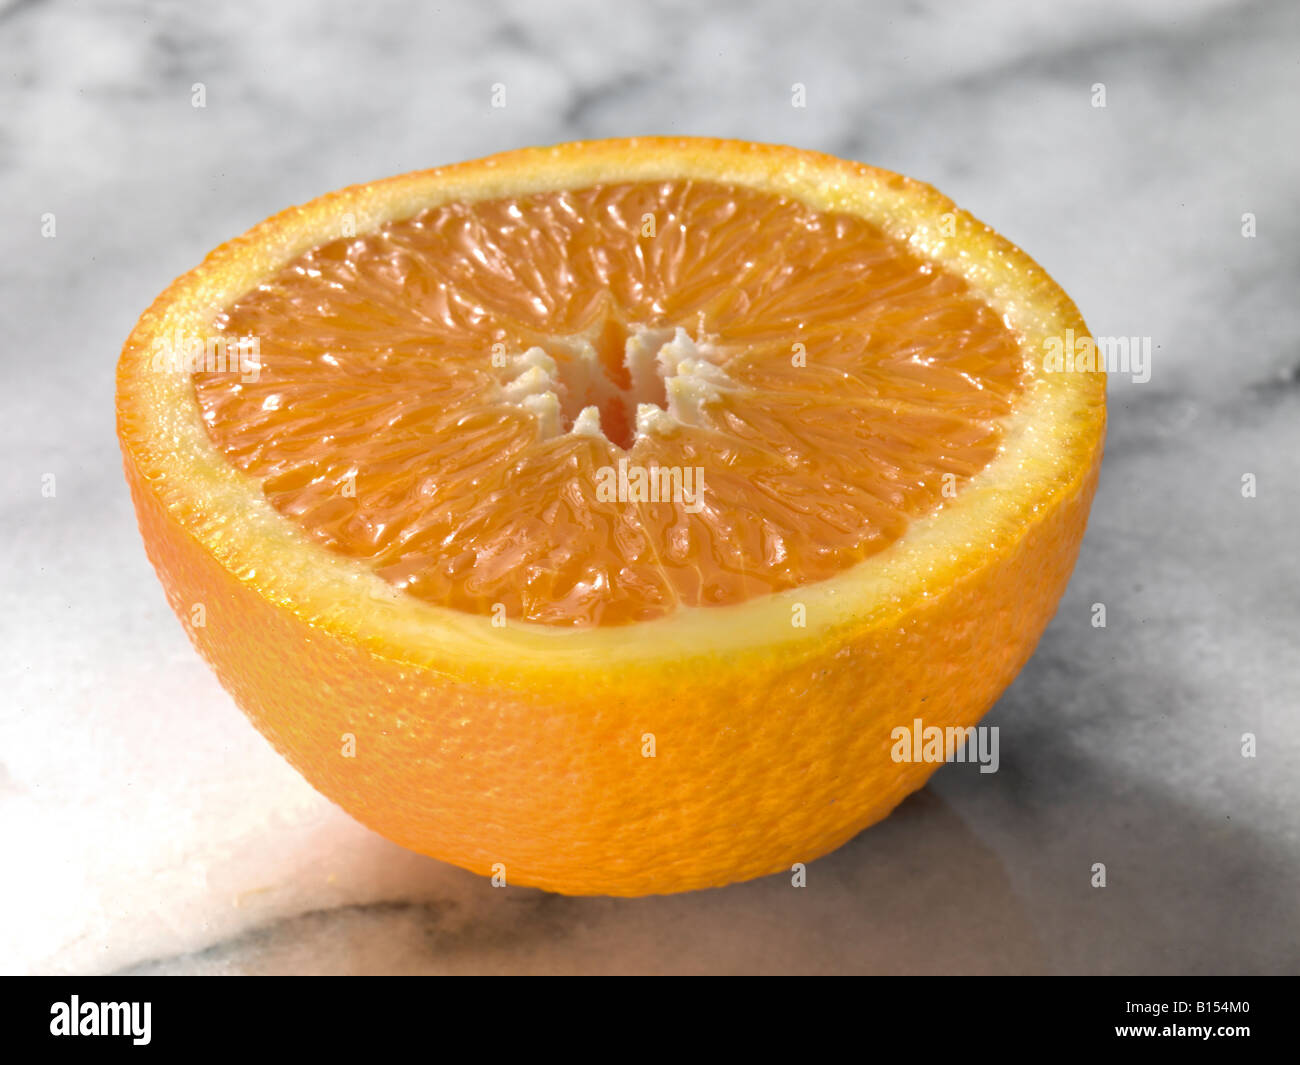 orange half,half an orange ,juicy orange,cut orange, orange peel,vitamin C,droplets,fruit,freshness,health,nutrition,citrus,diet Stock Photo